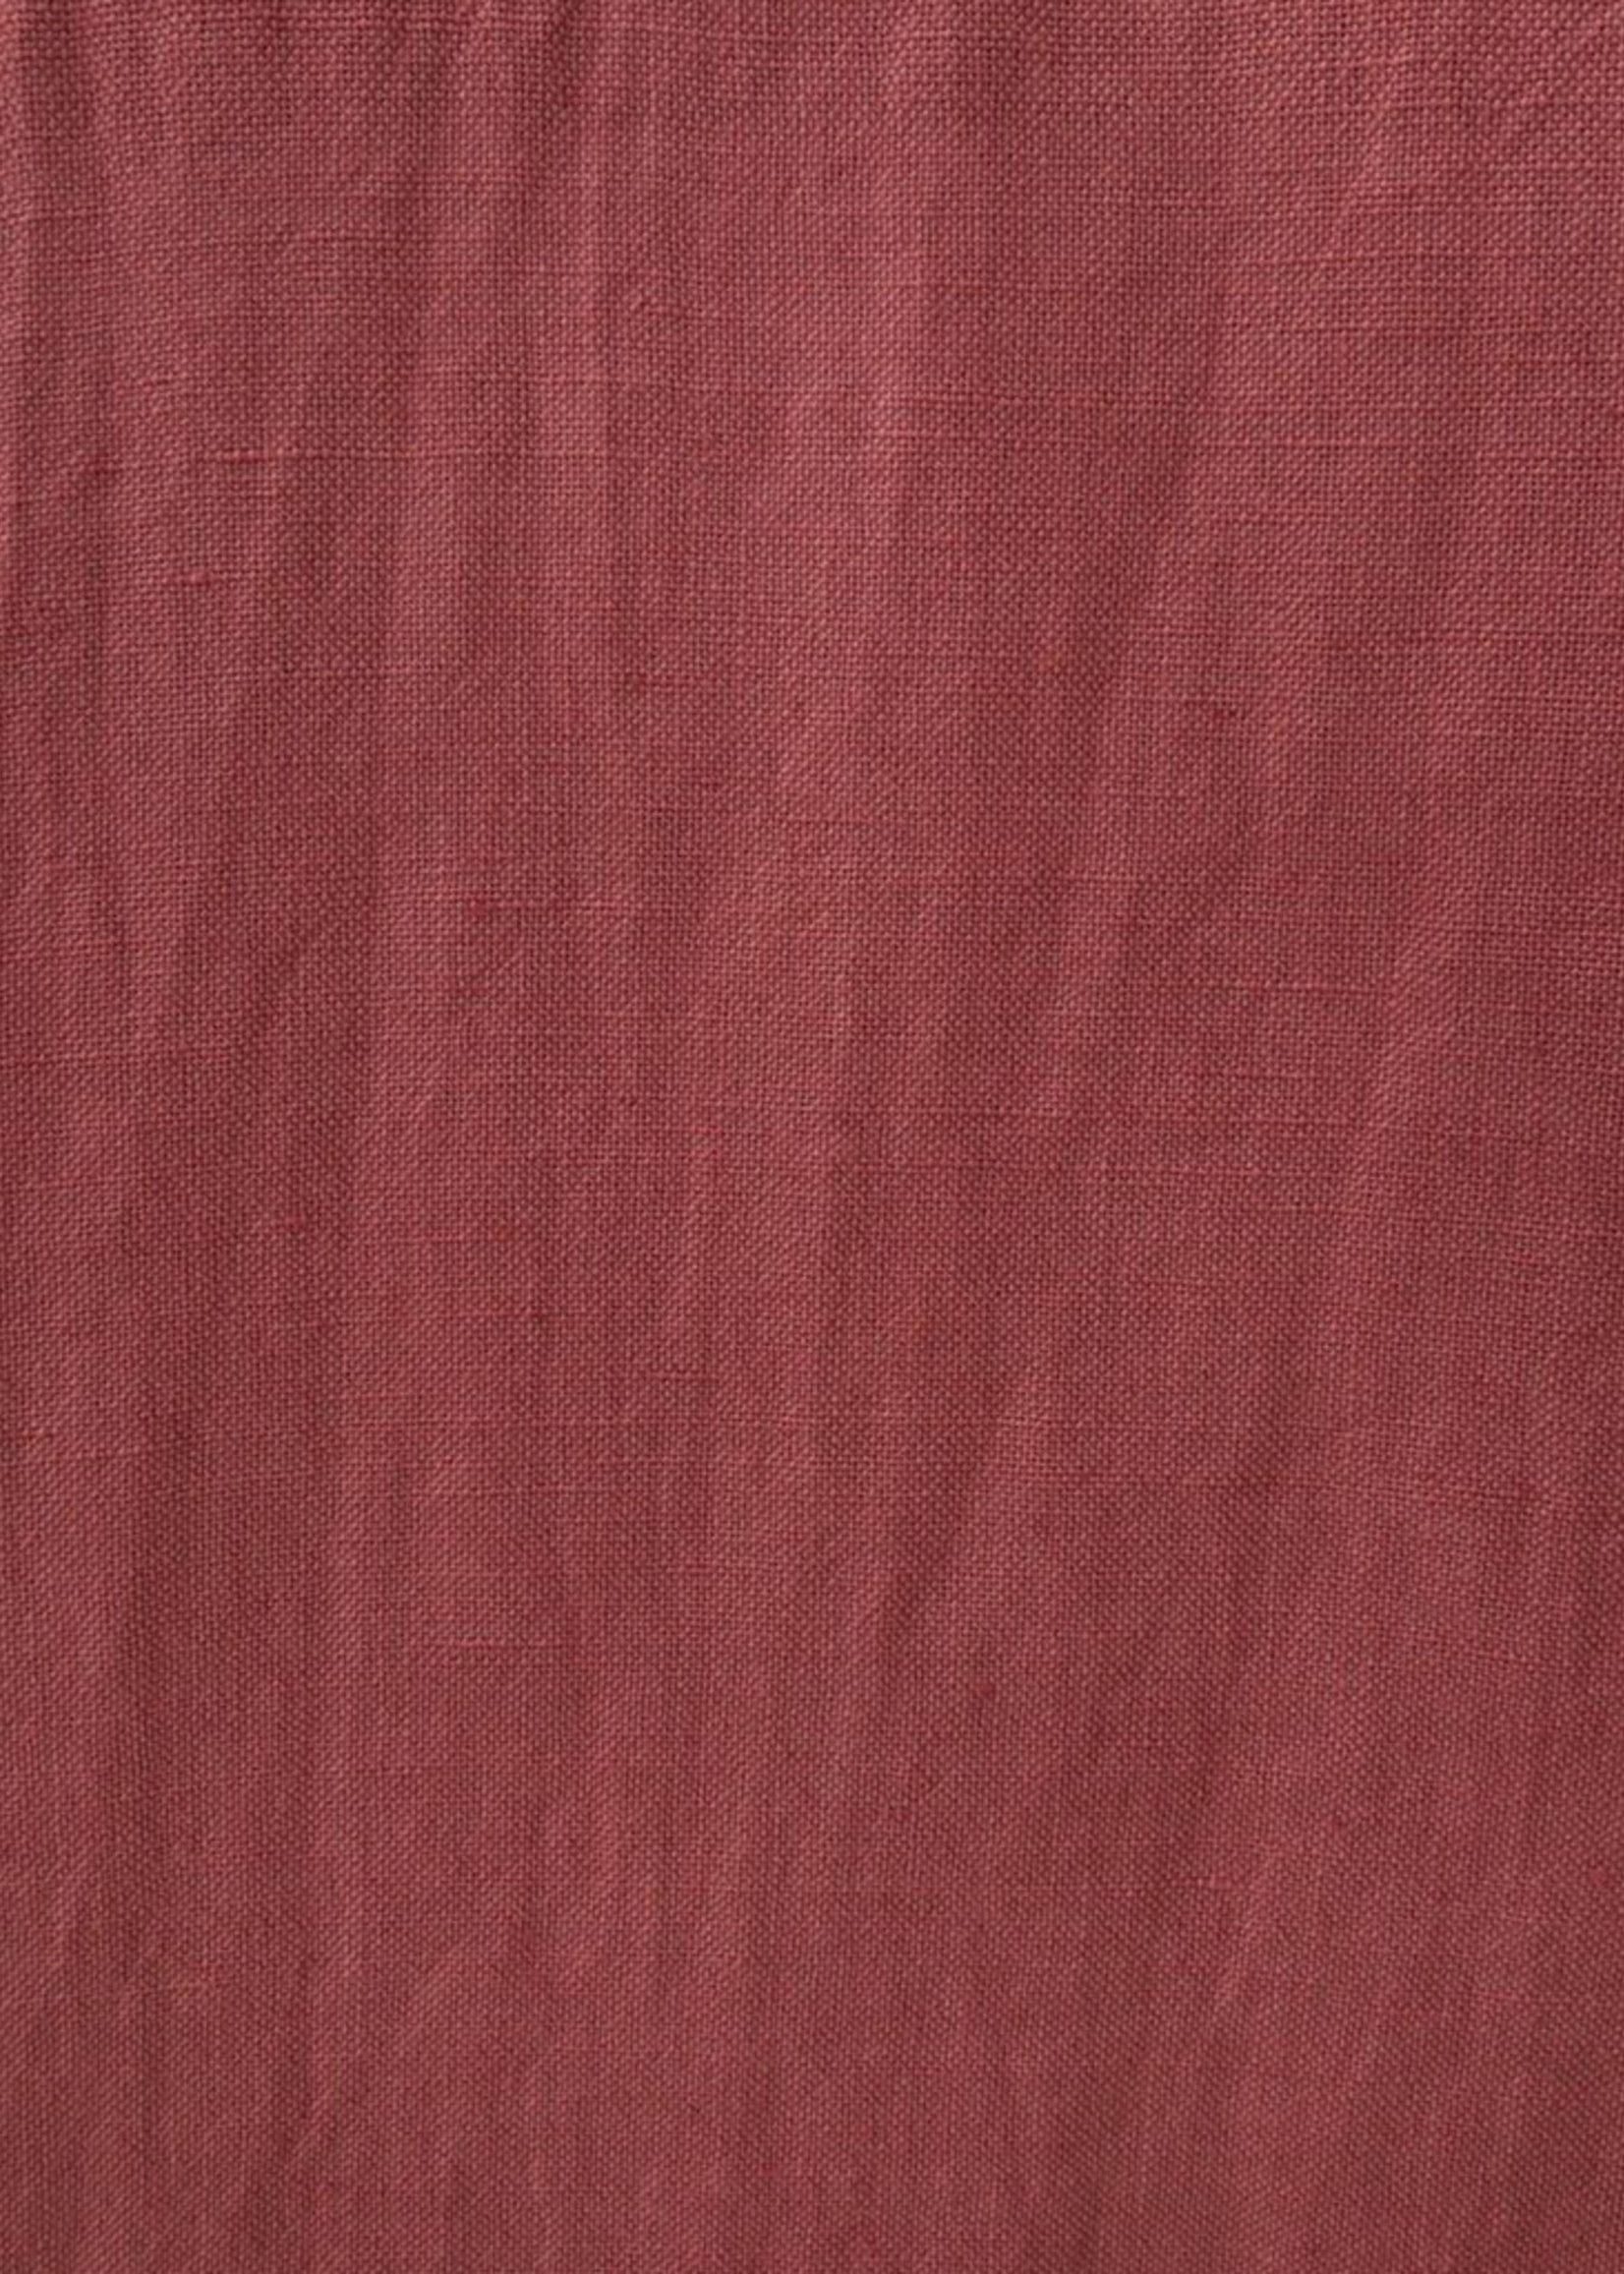 Mata Traders FINAL SALE Odelia Rose Linen Top *Size XL*